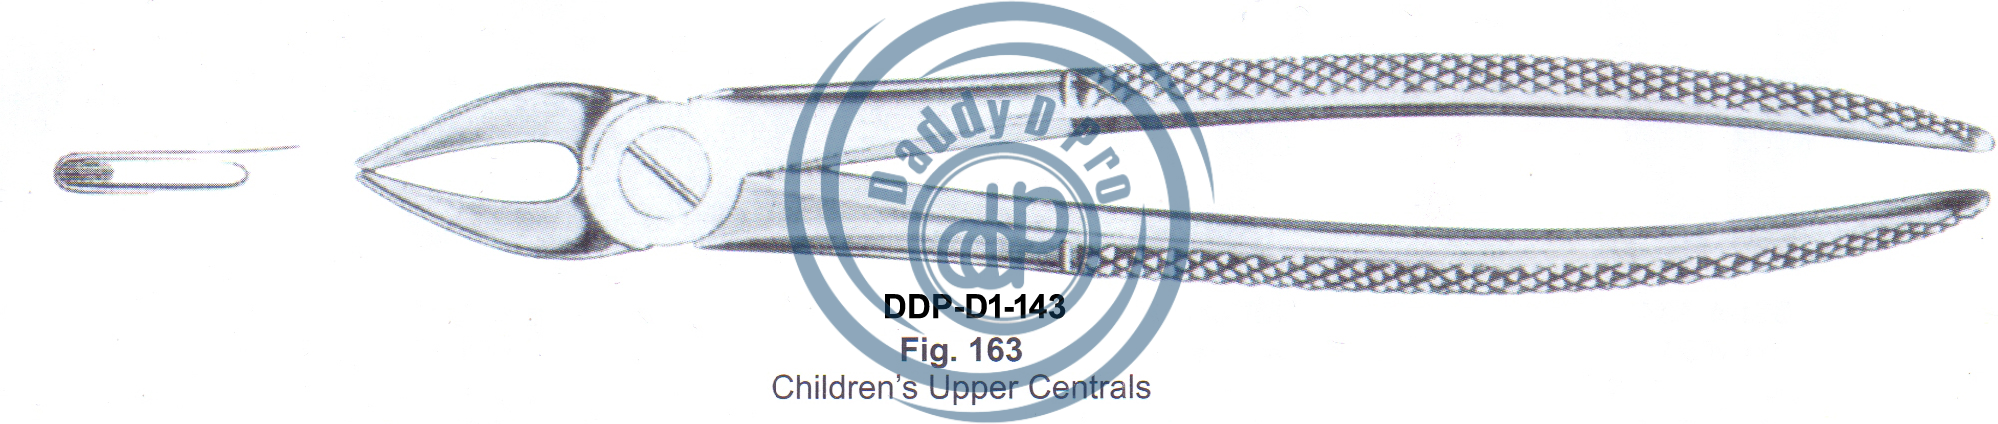 images/DDP-D1-143.png